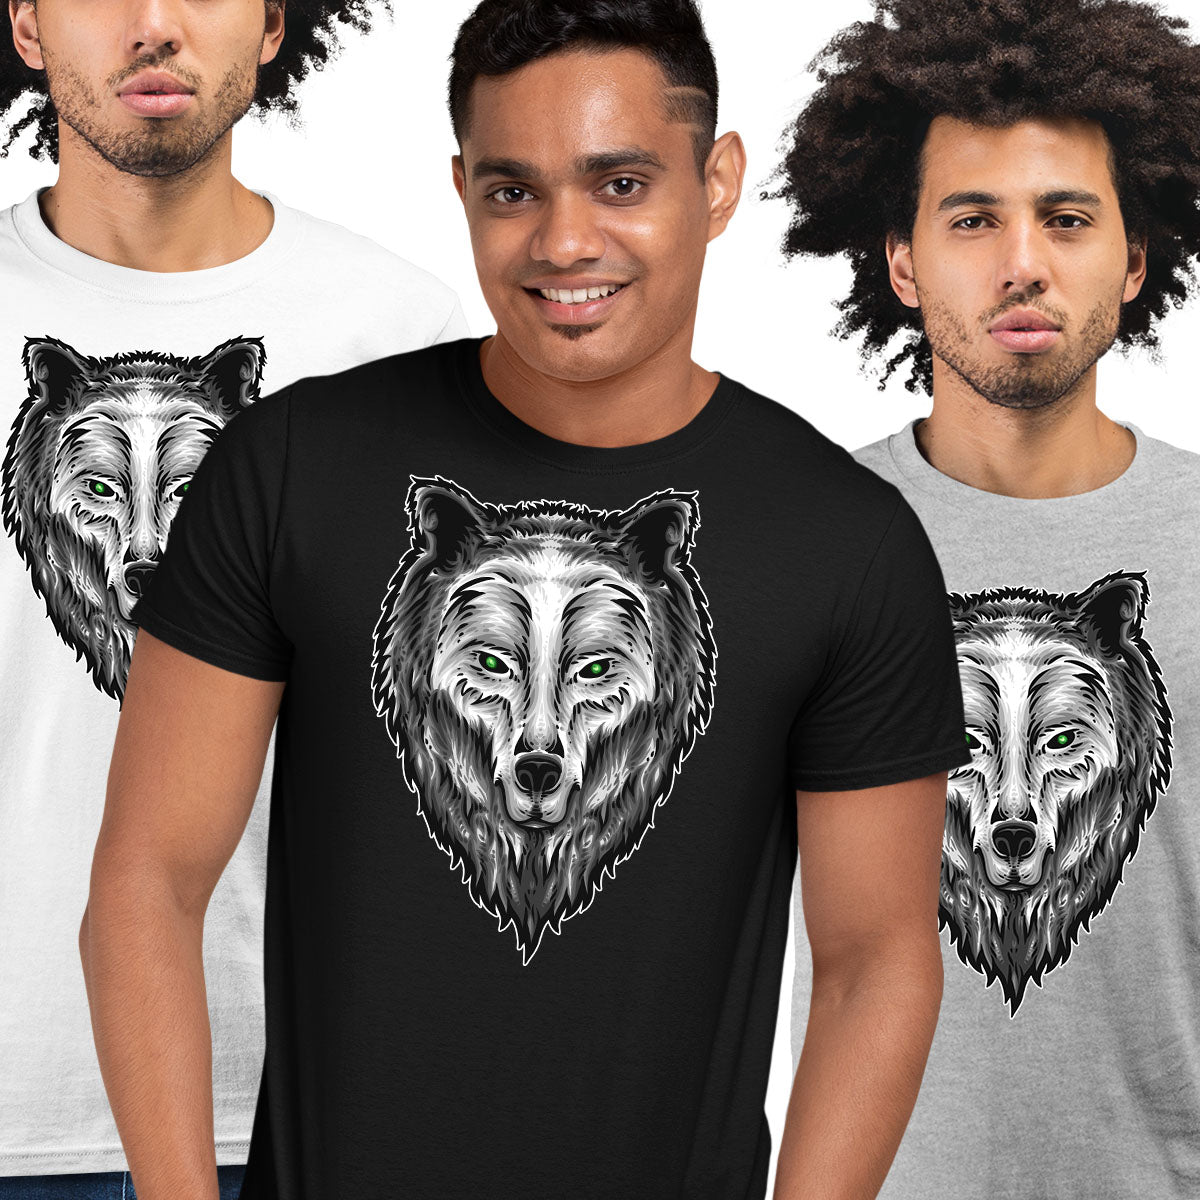 Silver Wolf A Legendary Creature of Native American Lore Unisex T-shirt - Kuzi Tees